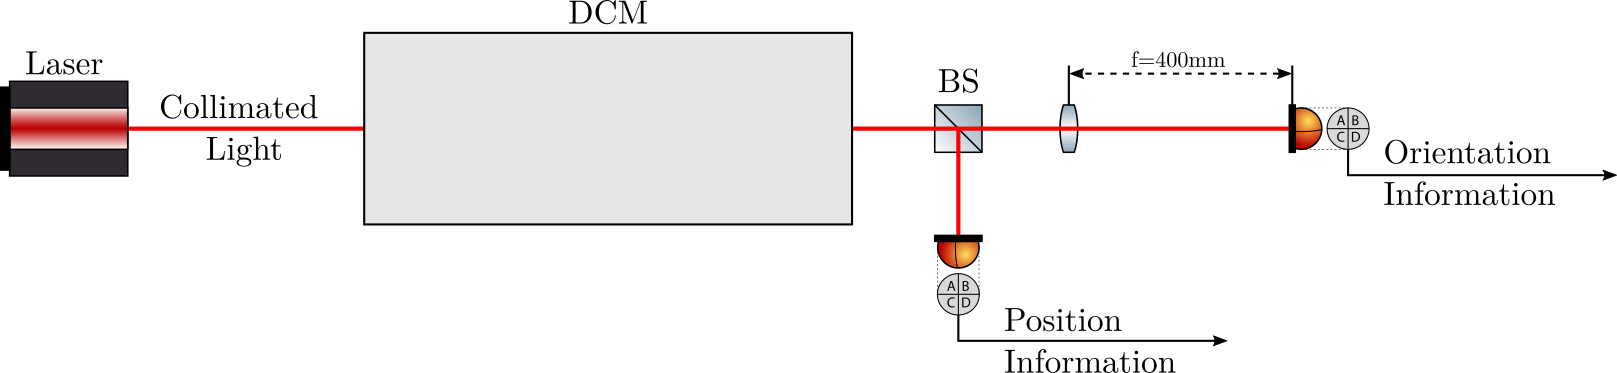 laser_setup_optical_schematic.png